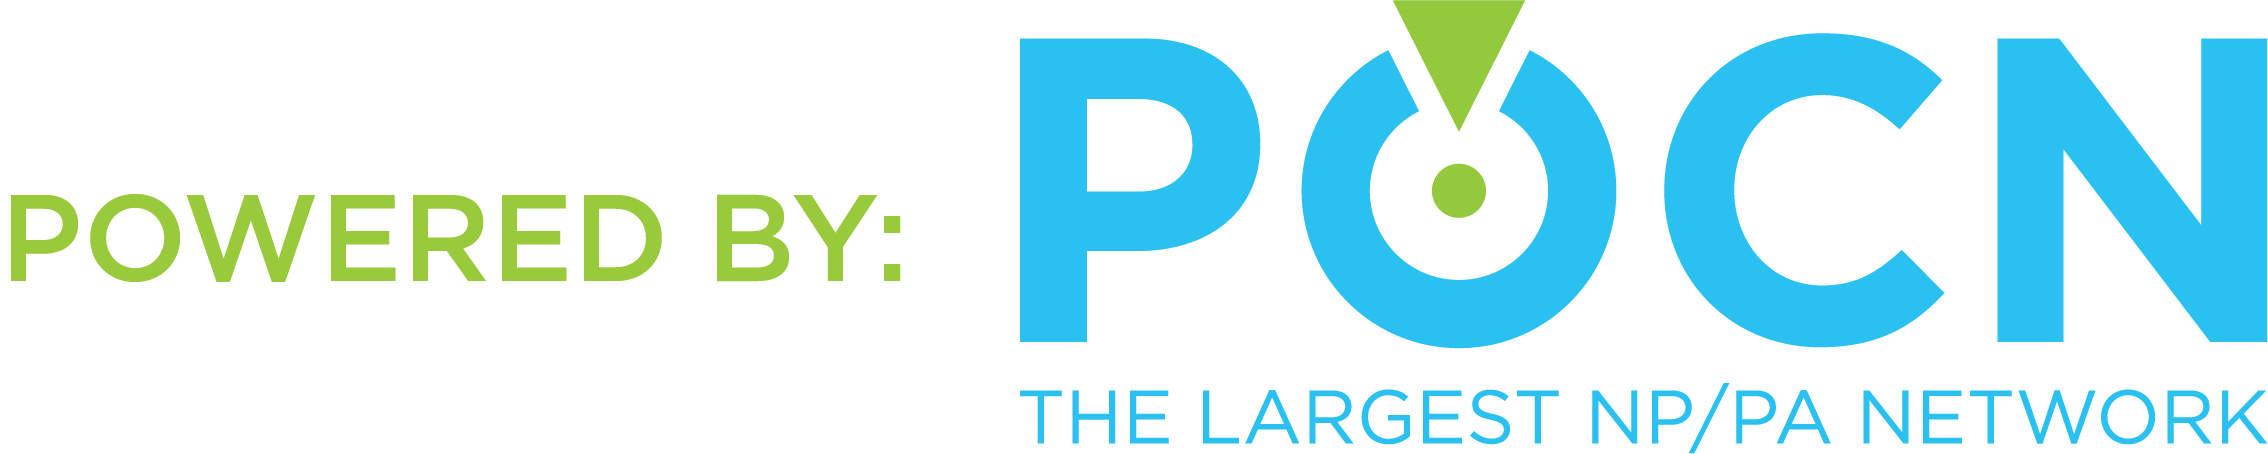 Powered by POCN logo